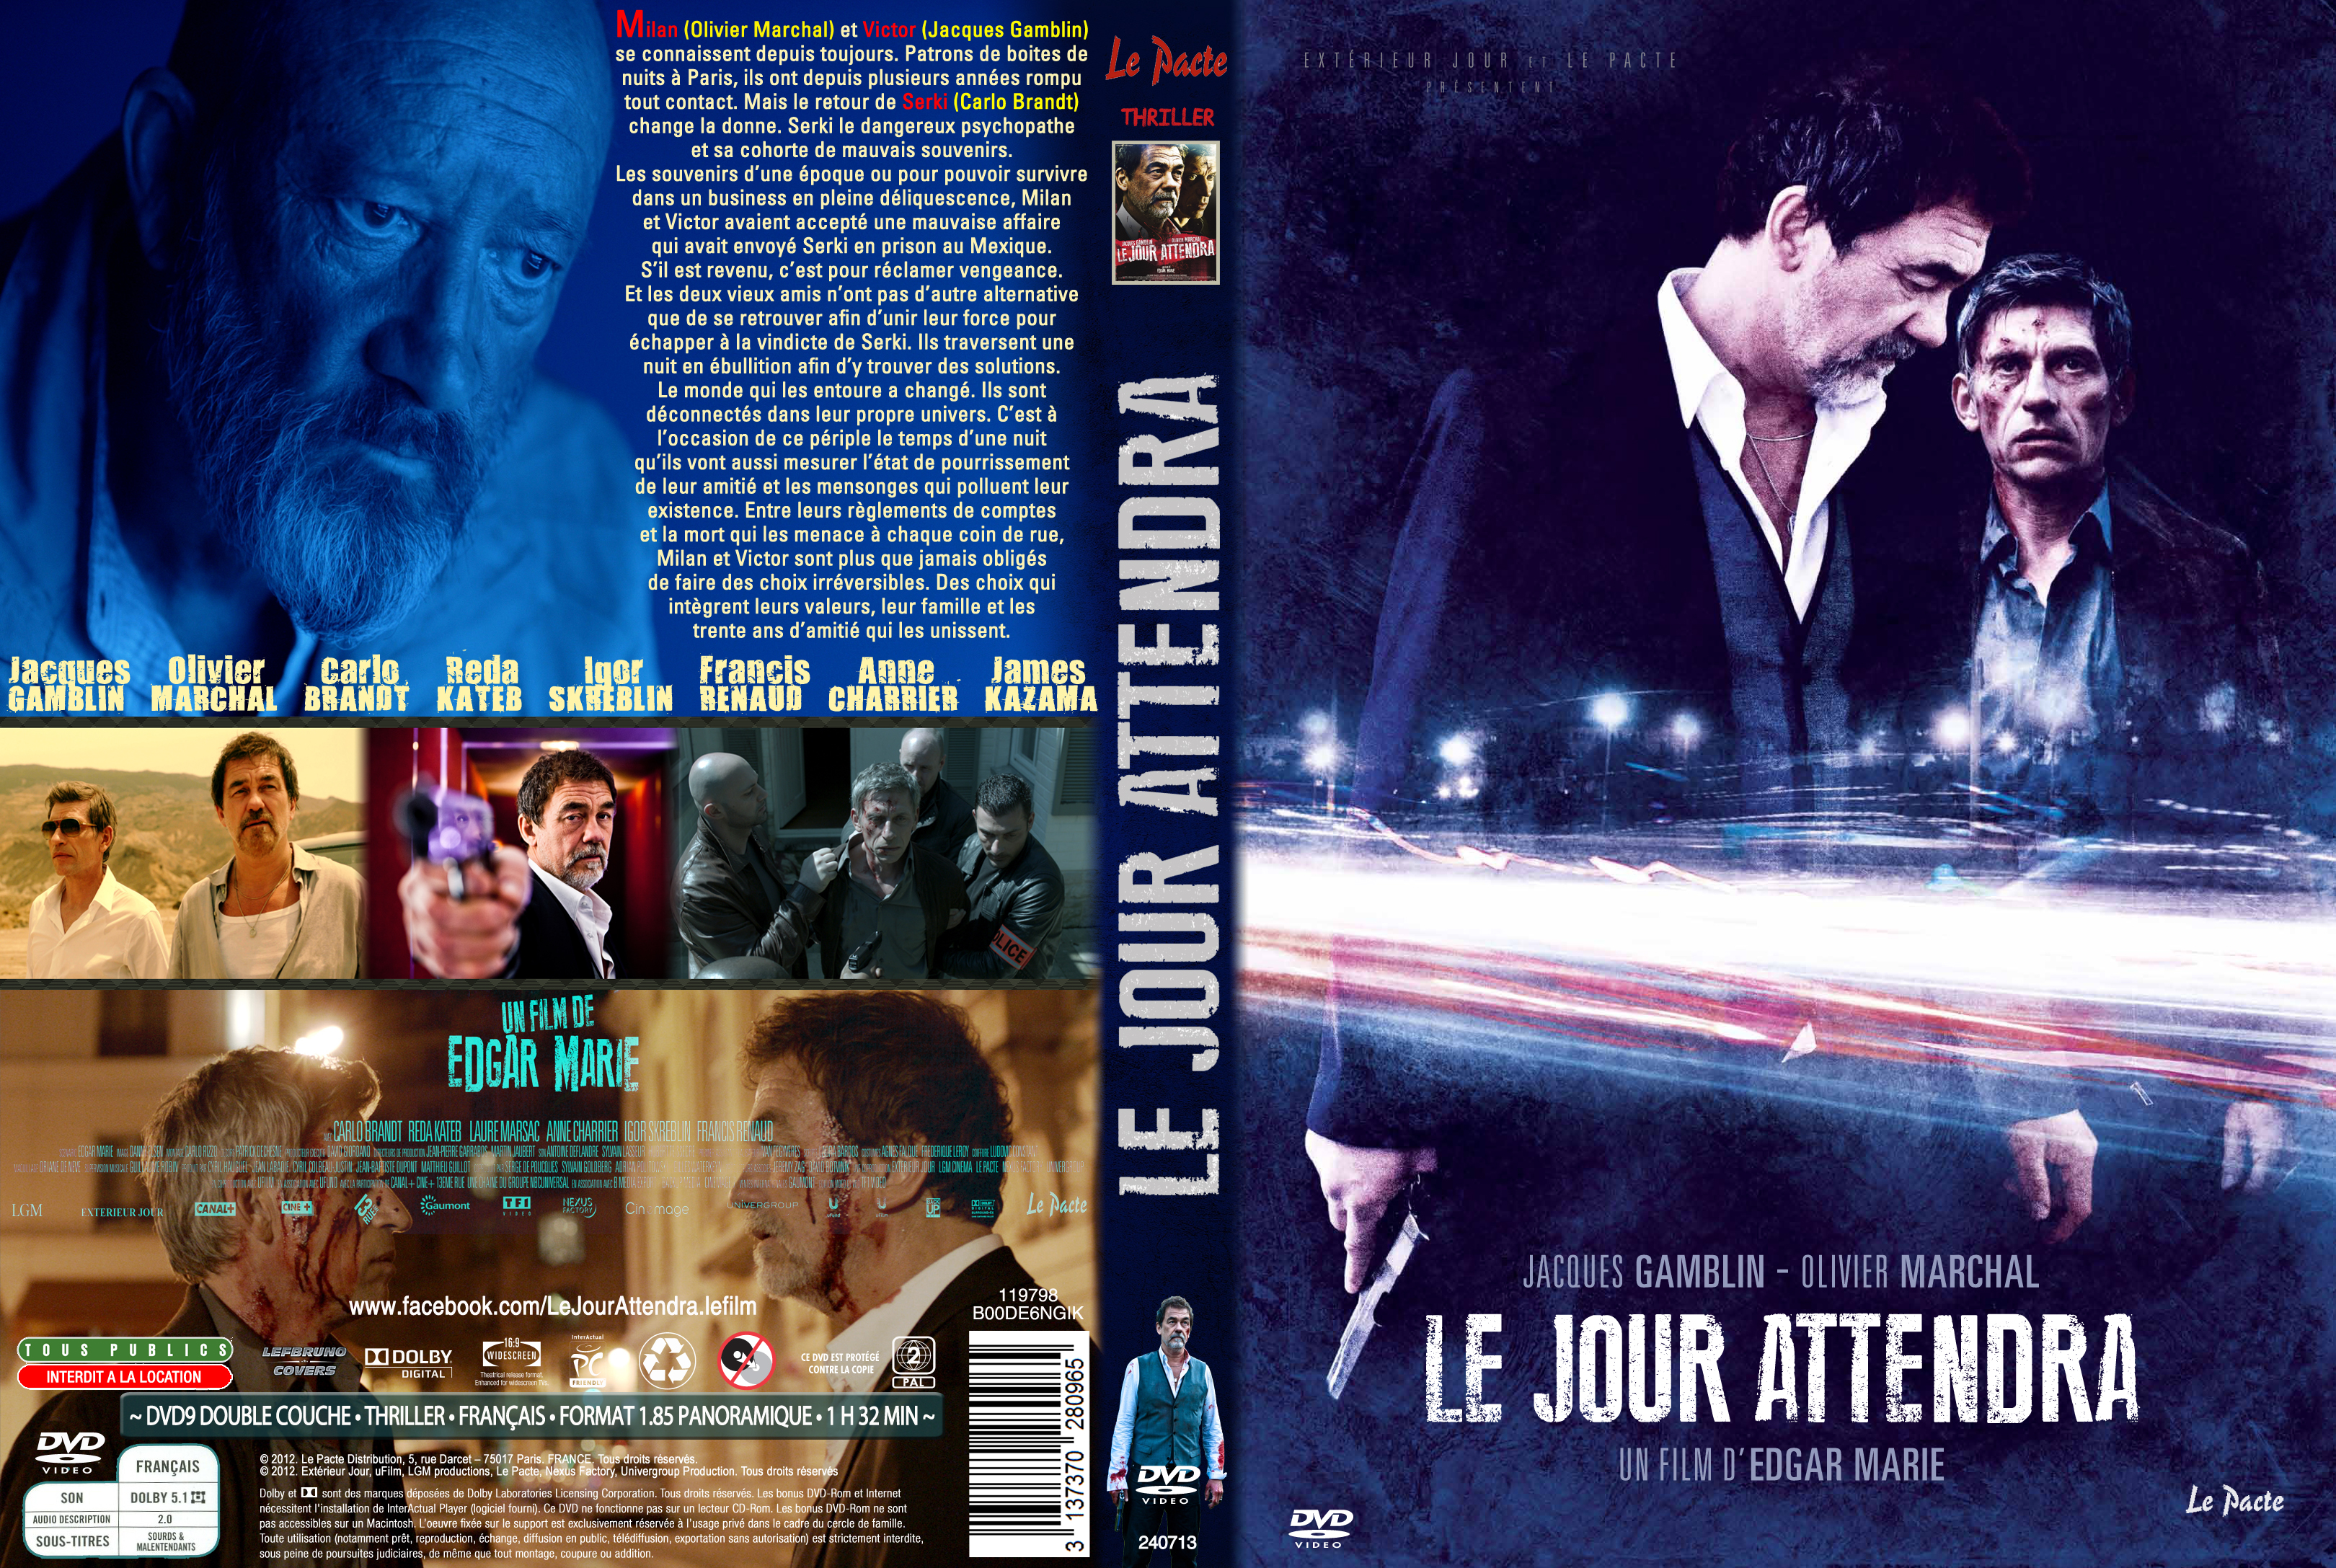 Jaquette DVD Le Jour Attendra custom v2